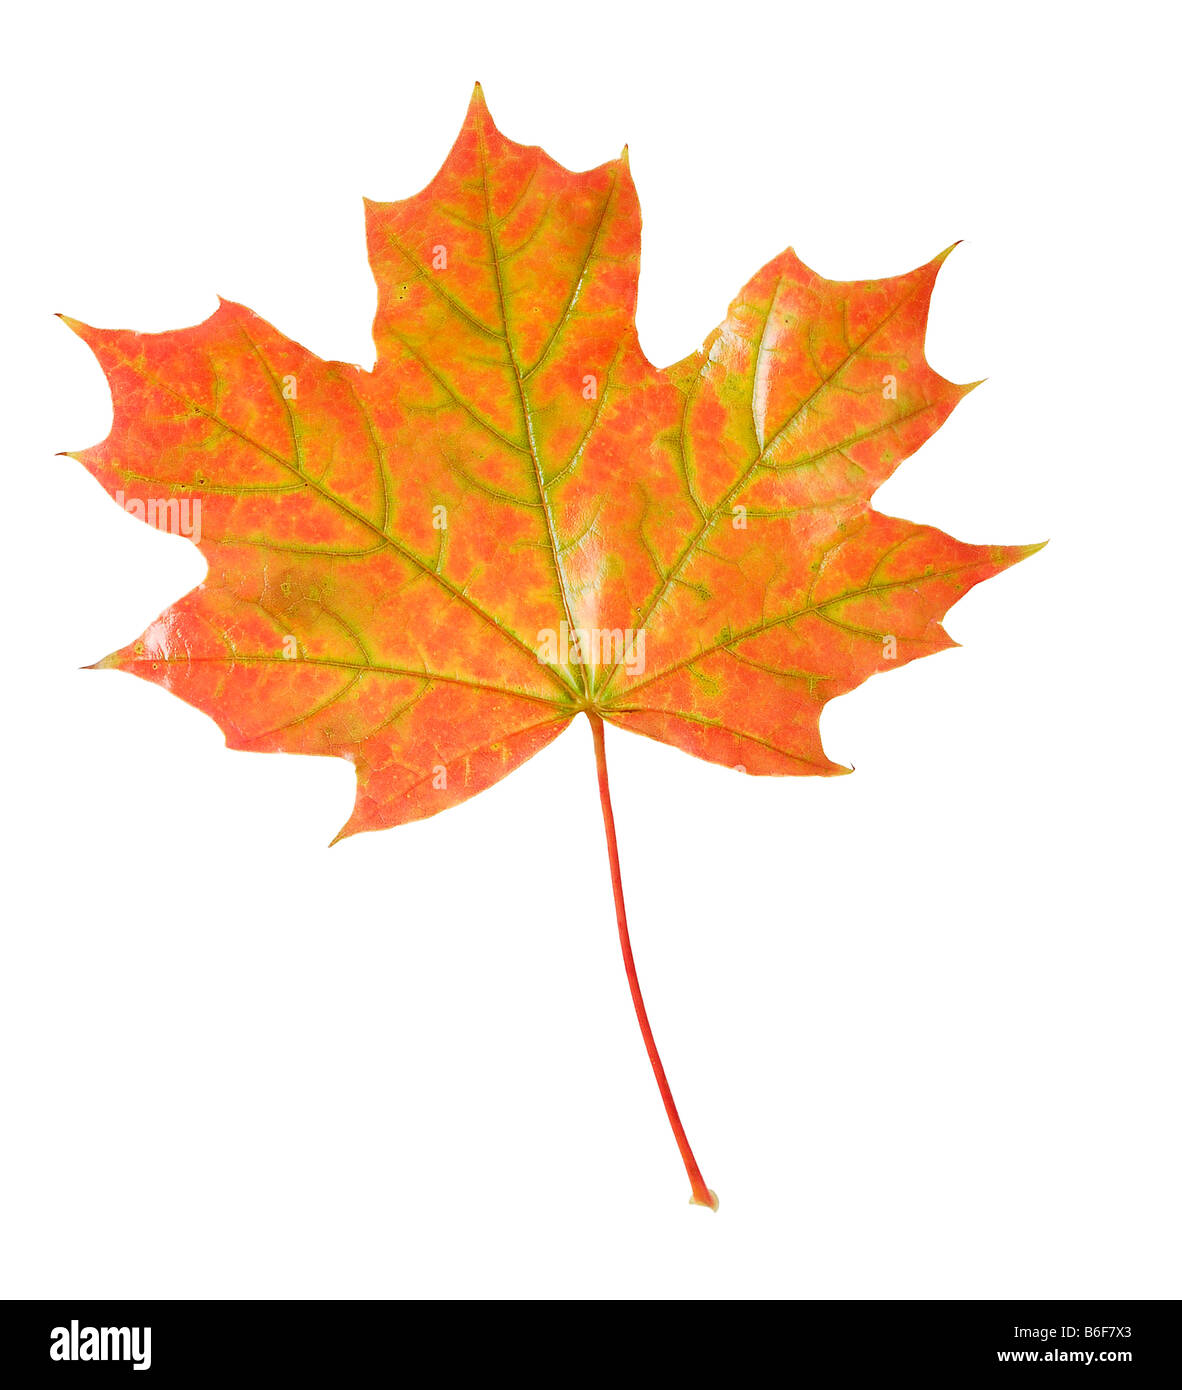 Oak leaf in Autumn or Fall colors Stock Photo